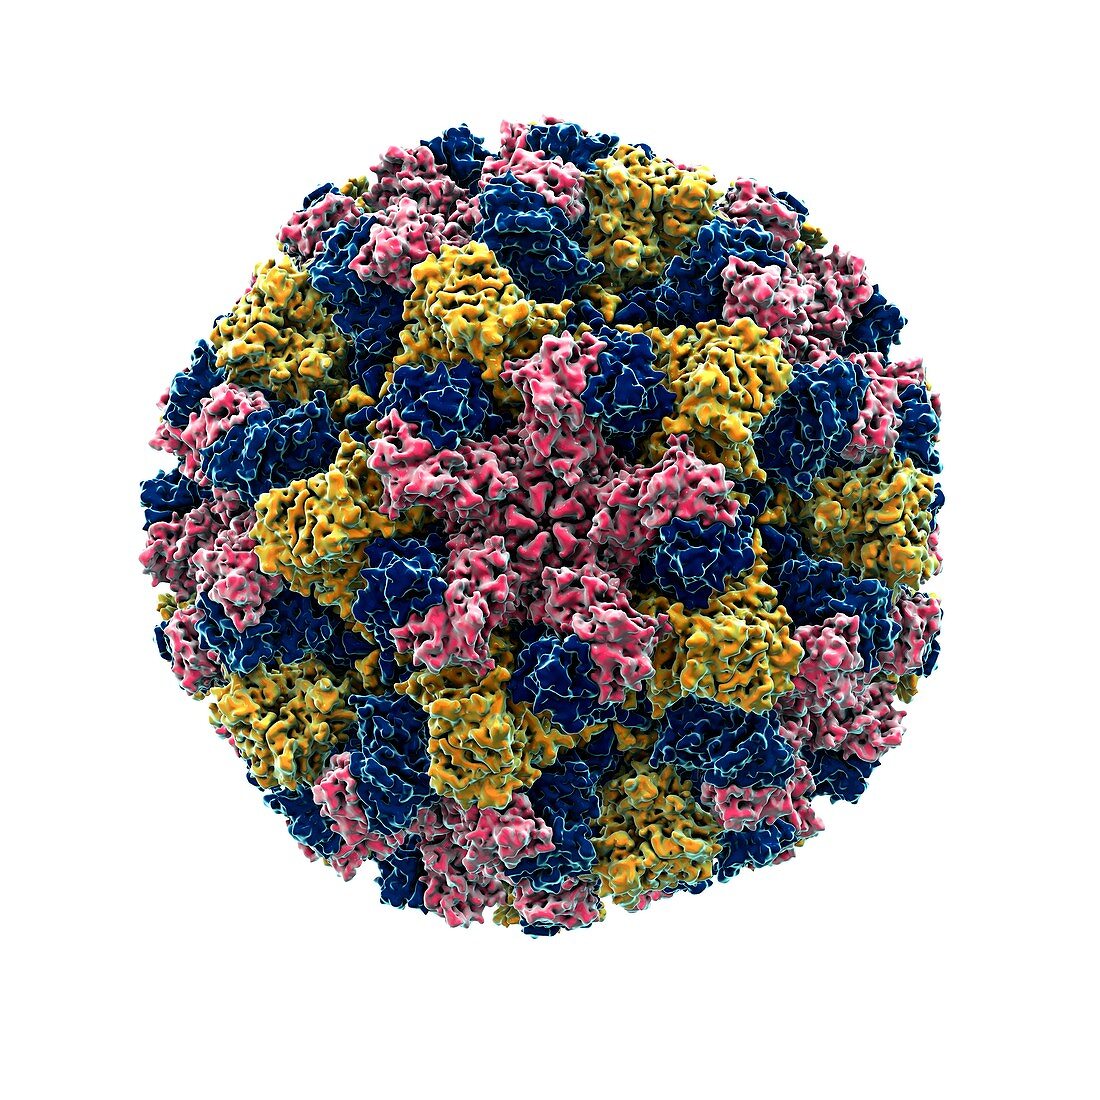 Norovirus particle,artwork